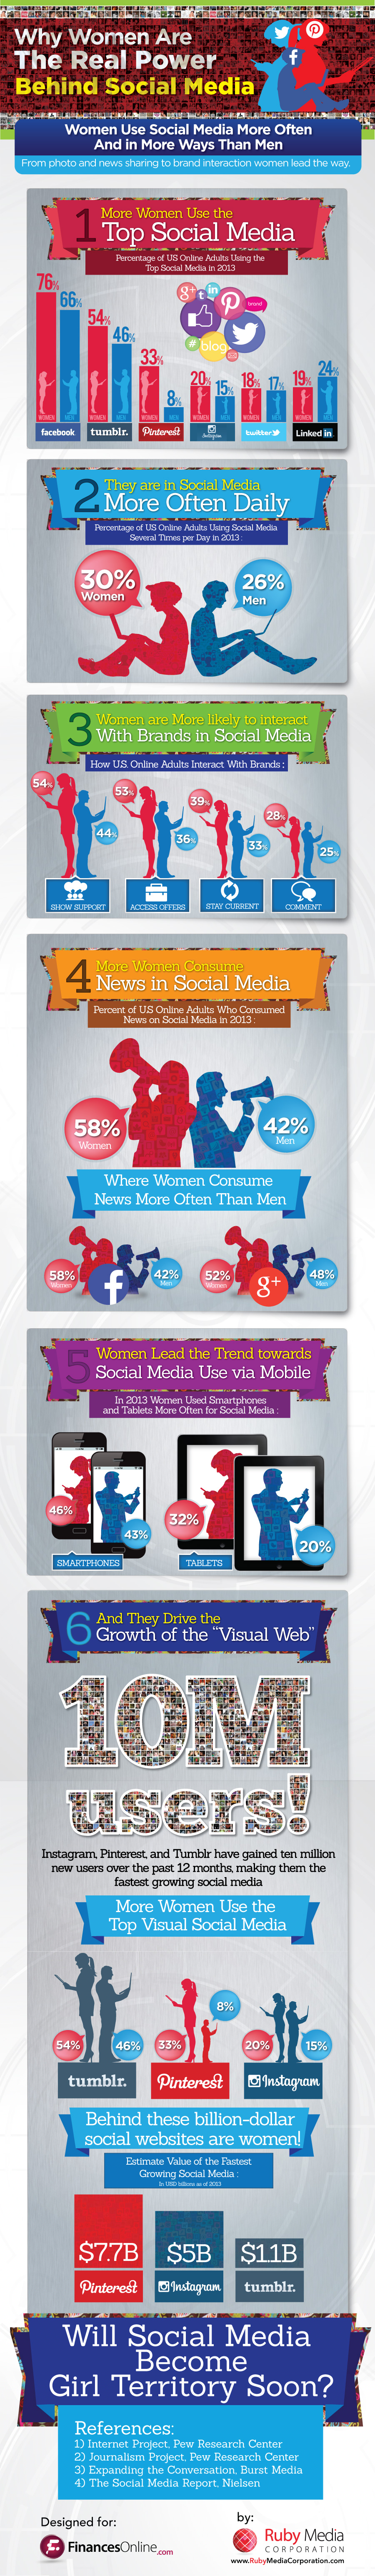 Women Dominate Social Media